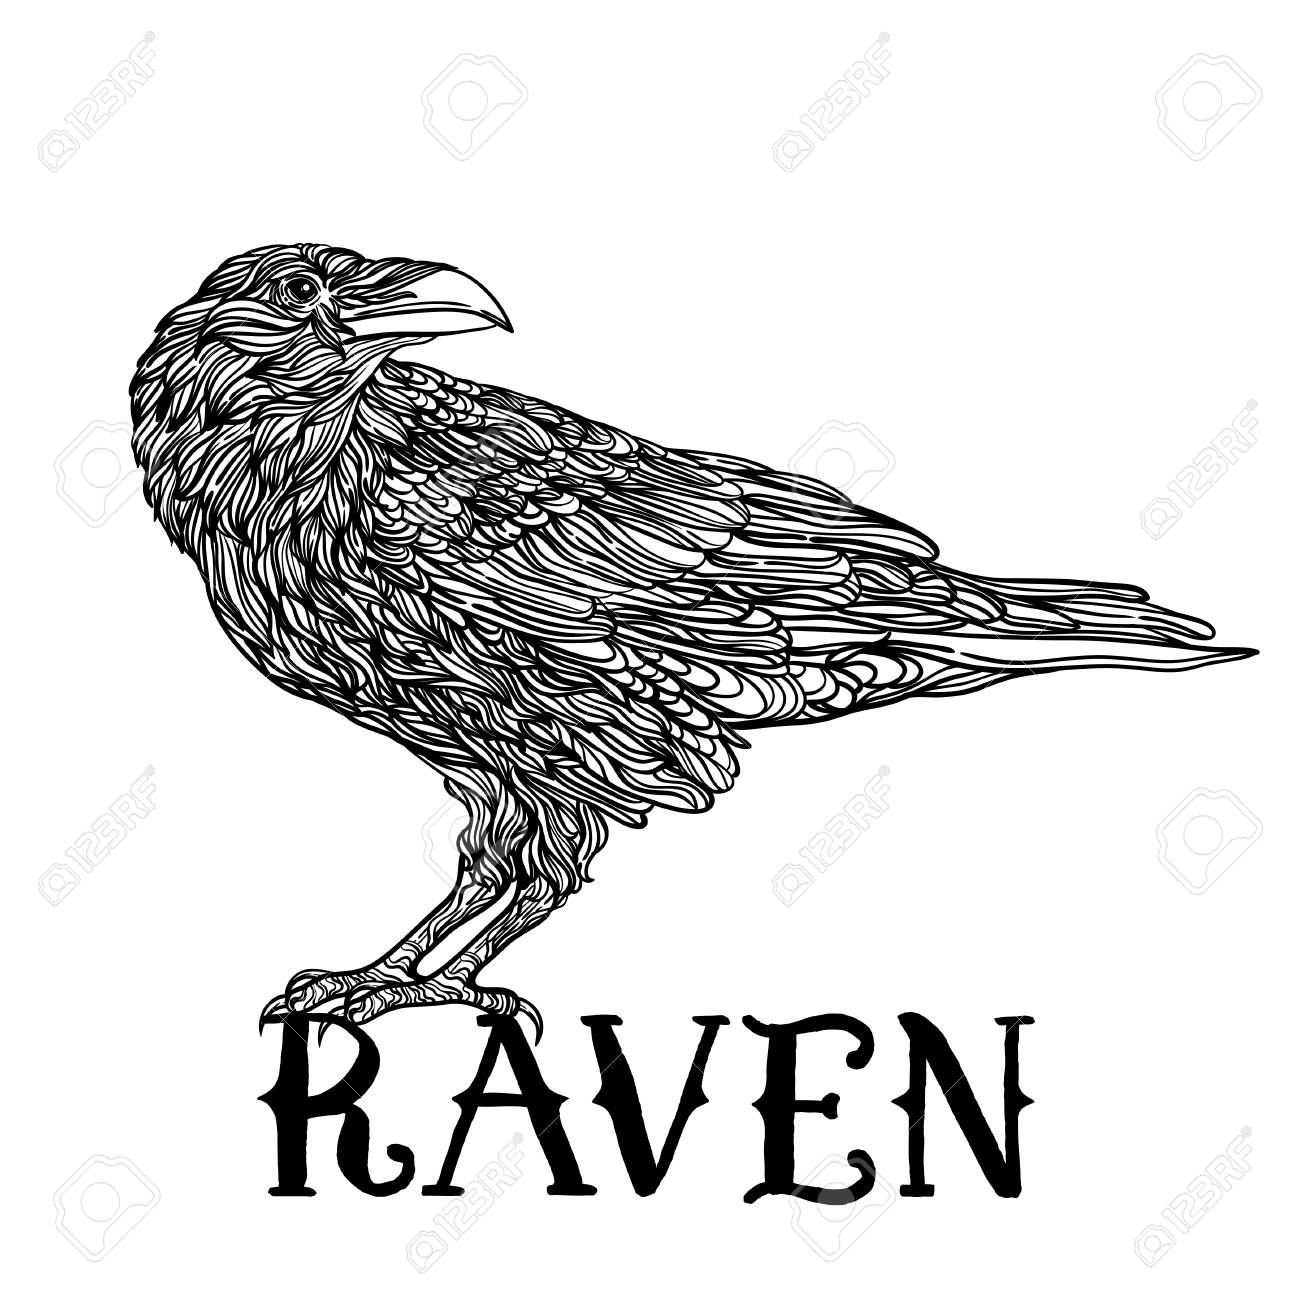 Bird raven zentangle style good for t